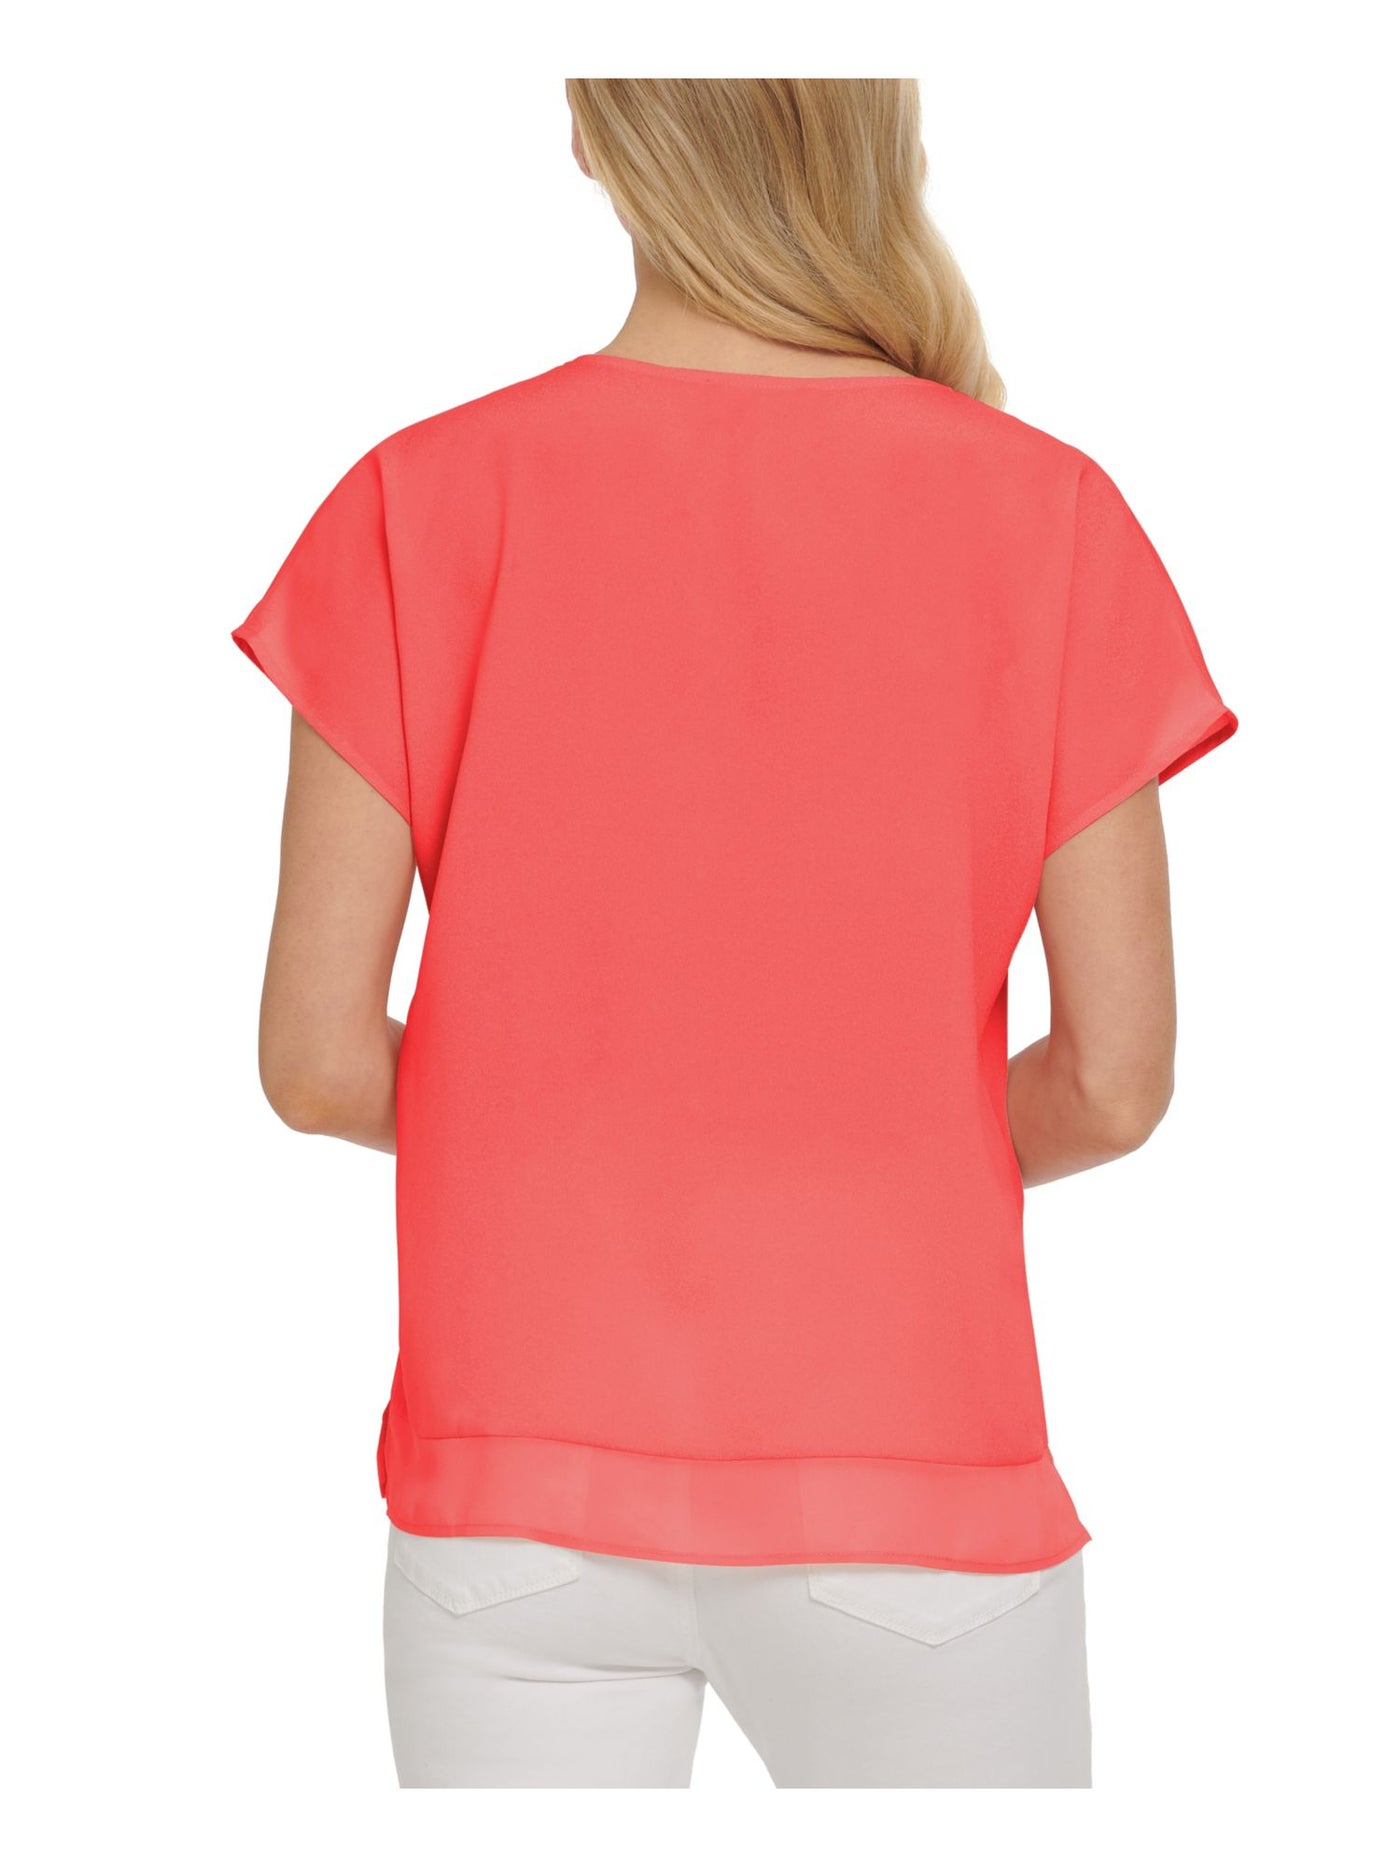 DKNY Womens Coral Sheer Chiffon Trim Vented Hem Short Sleeve V Neck Wear To Work Top XS